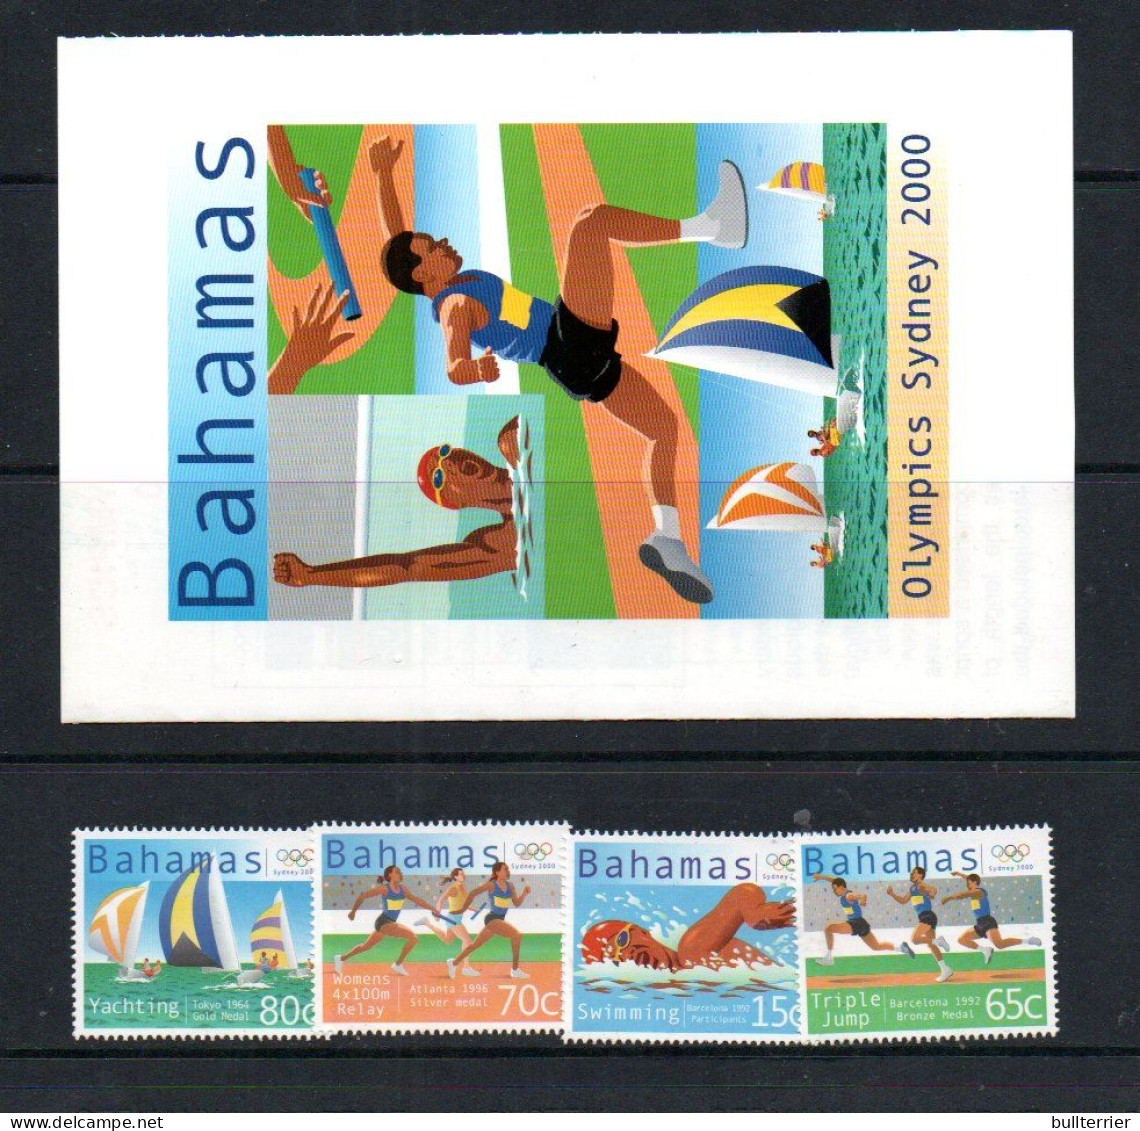 OLYMPICS -  BAHAMAS  - 2000-Sydney Olympics Set Of 4 + PUBLICITY Sheet  Mint Never Hinged - Summer 2000: Sydney